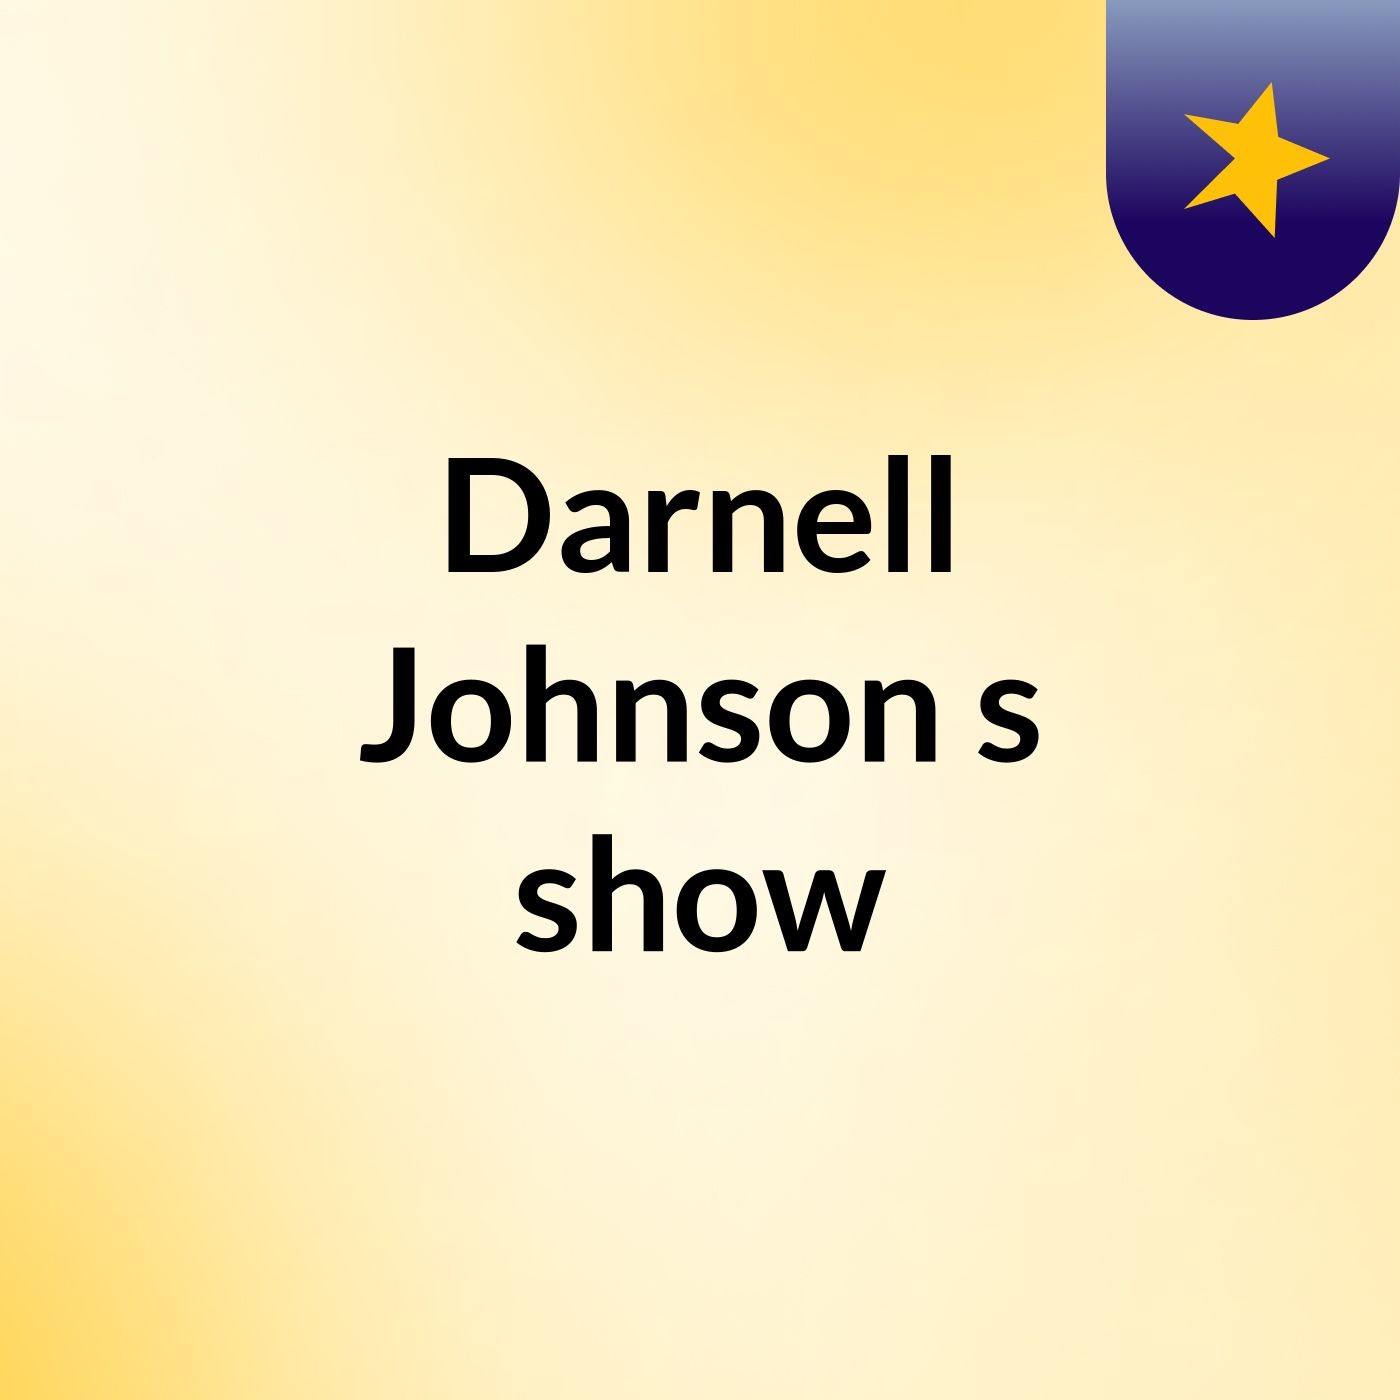 Episode 2 - Darnell Johnson's show